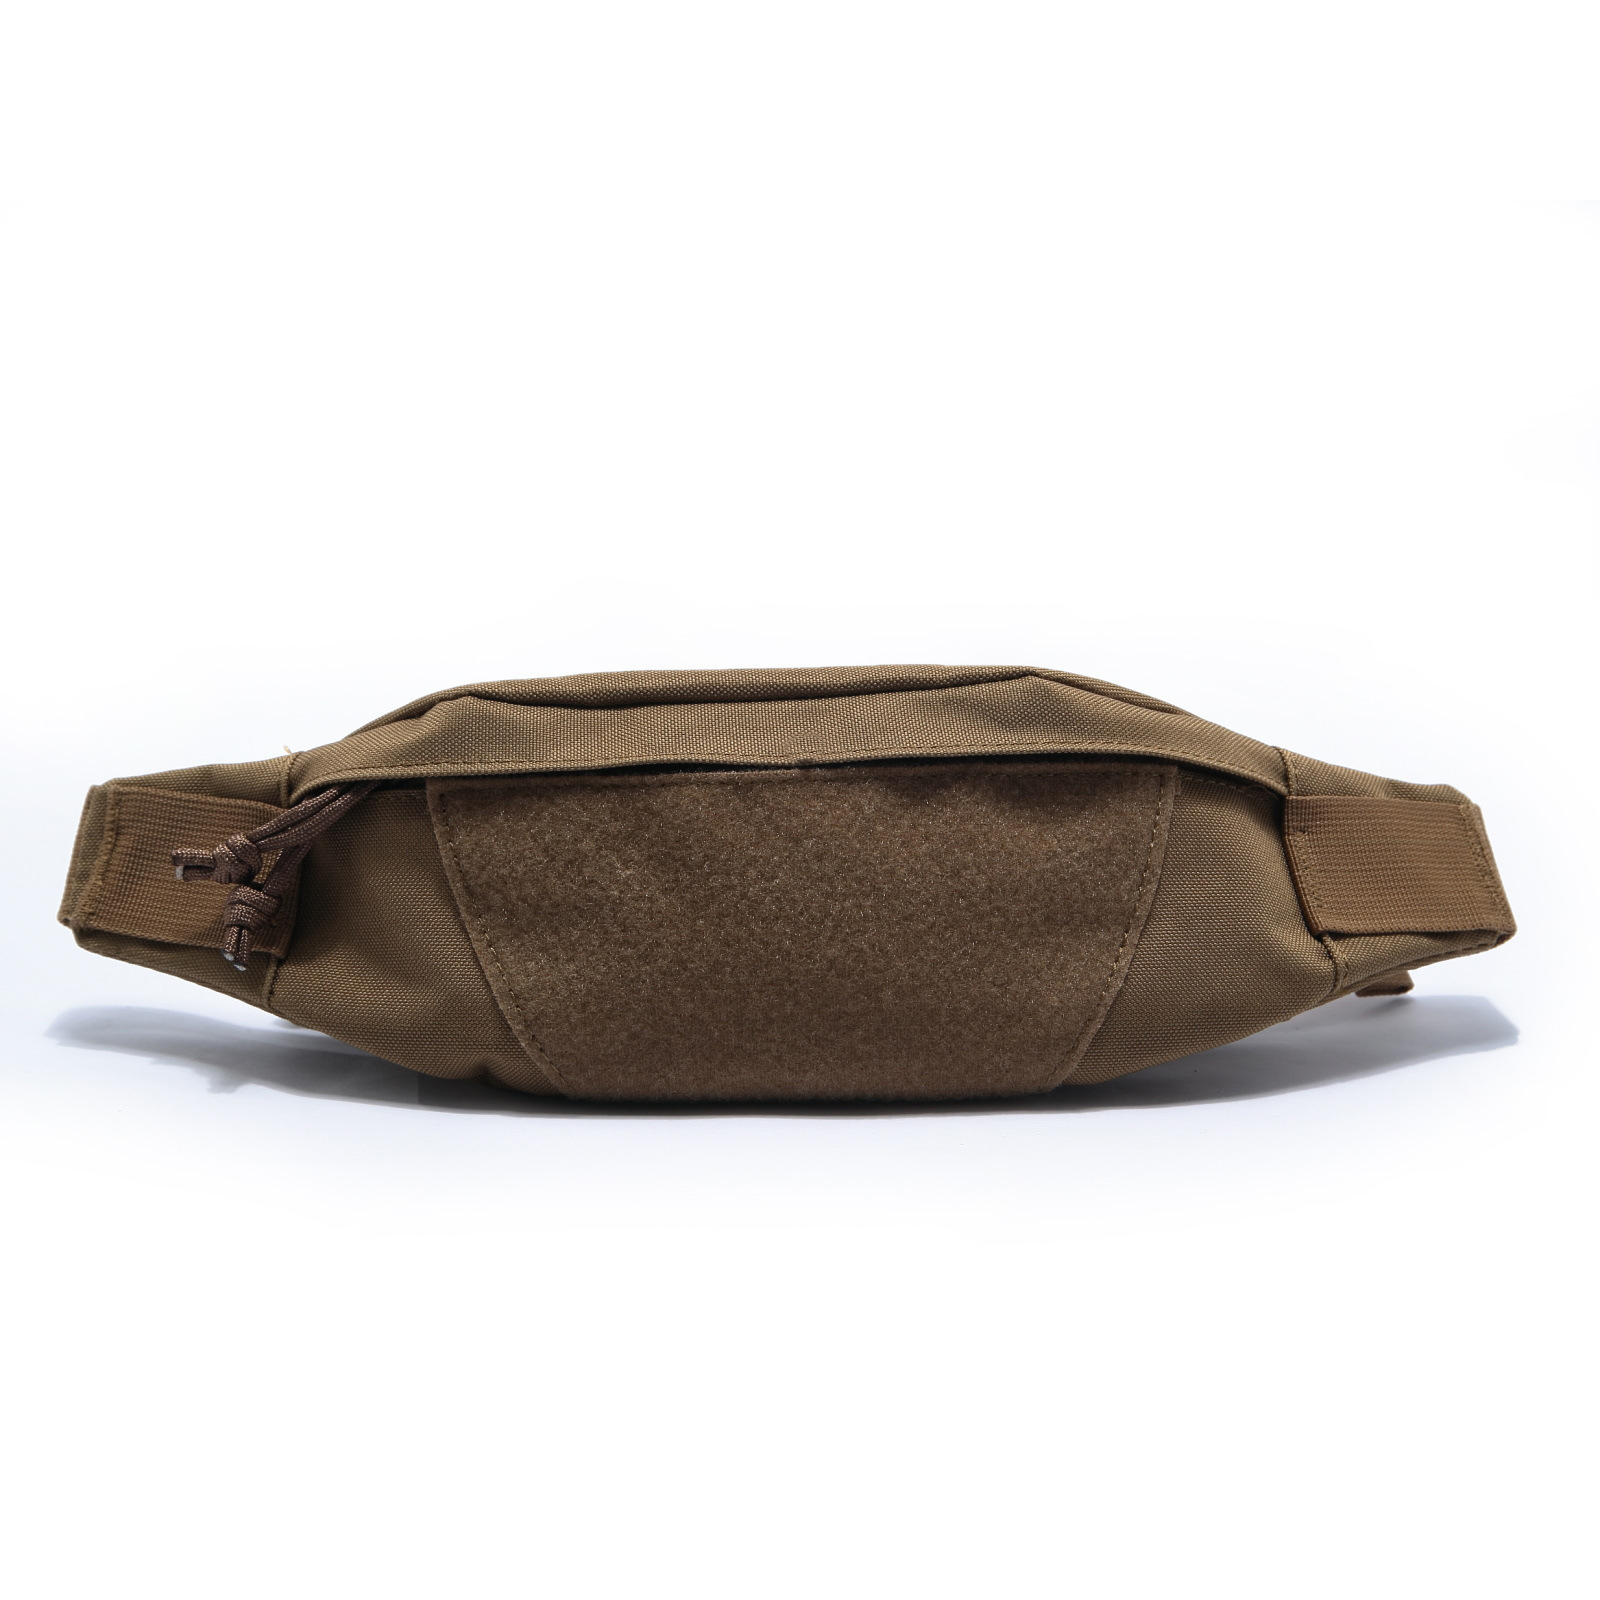 Camouflage-Tactical-Waist-Bag-Cross-Bag-Tactical-Waist-Bag-Outdoor-Fitness-Leisure-Bag-1568909-5